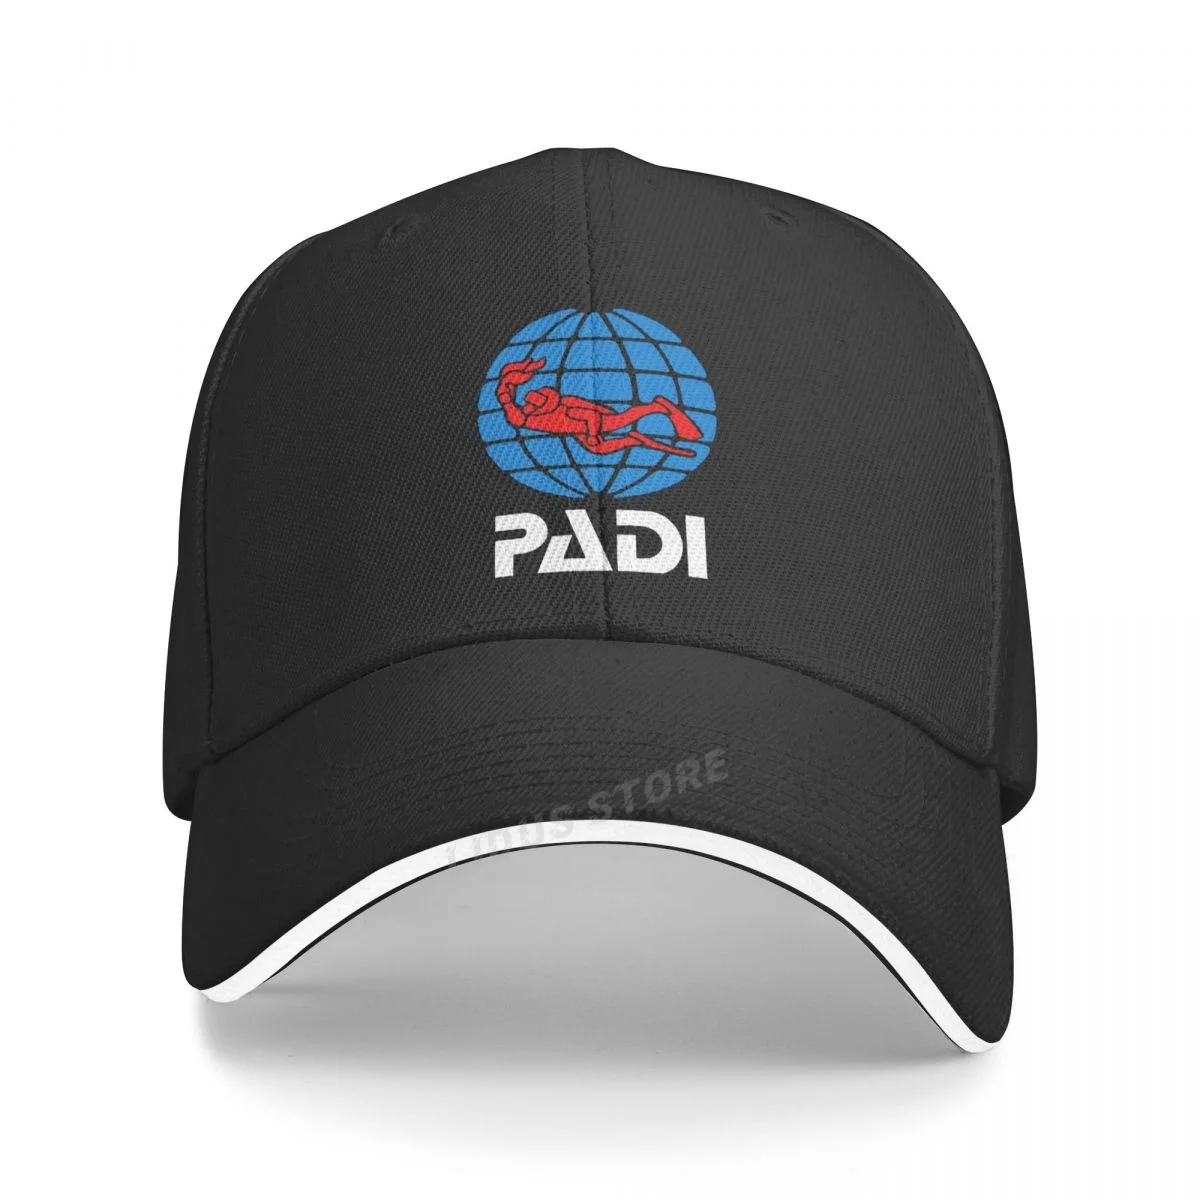 Scuba Driver Padi Caps Adult Hats Adjustable Fashion Outdoor Baseball Cap